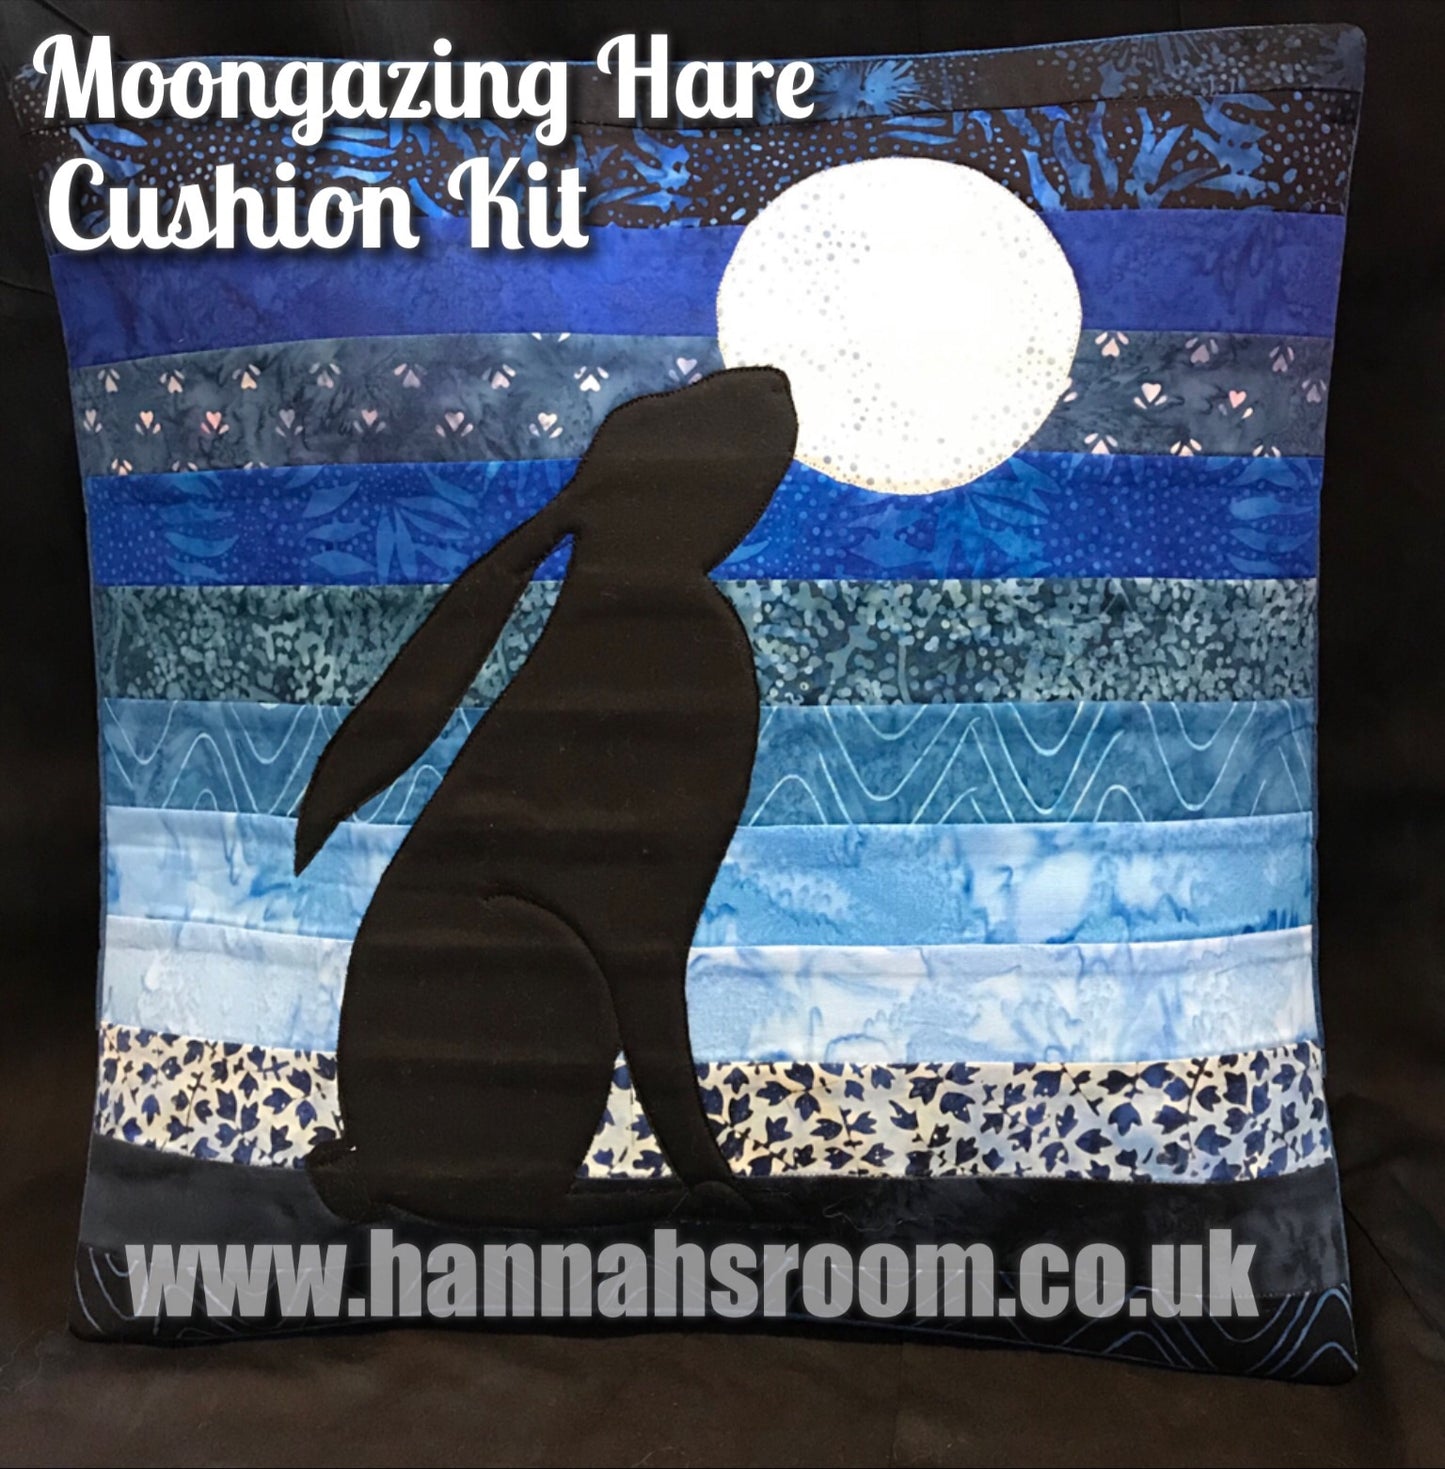 Moongazing Hare Cushion Kit limited edition